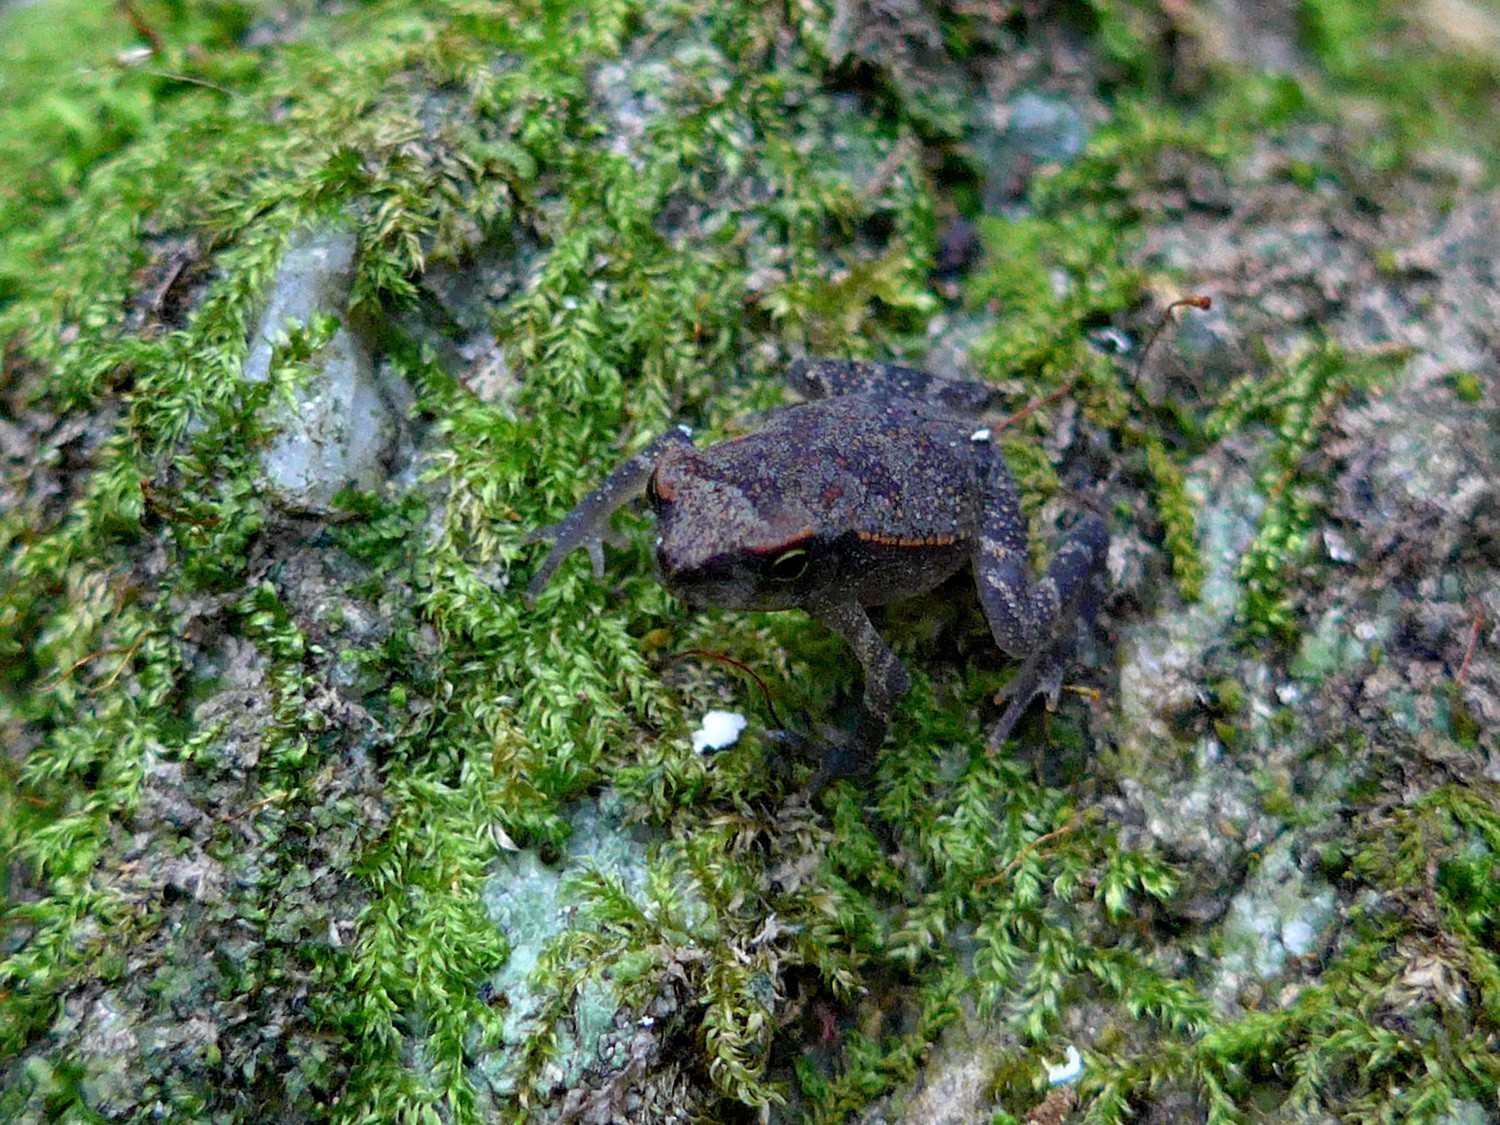 Tiny frog just like a thumbnail